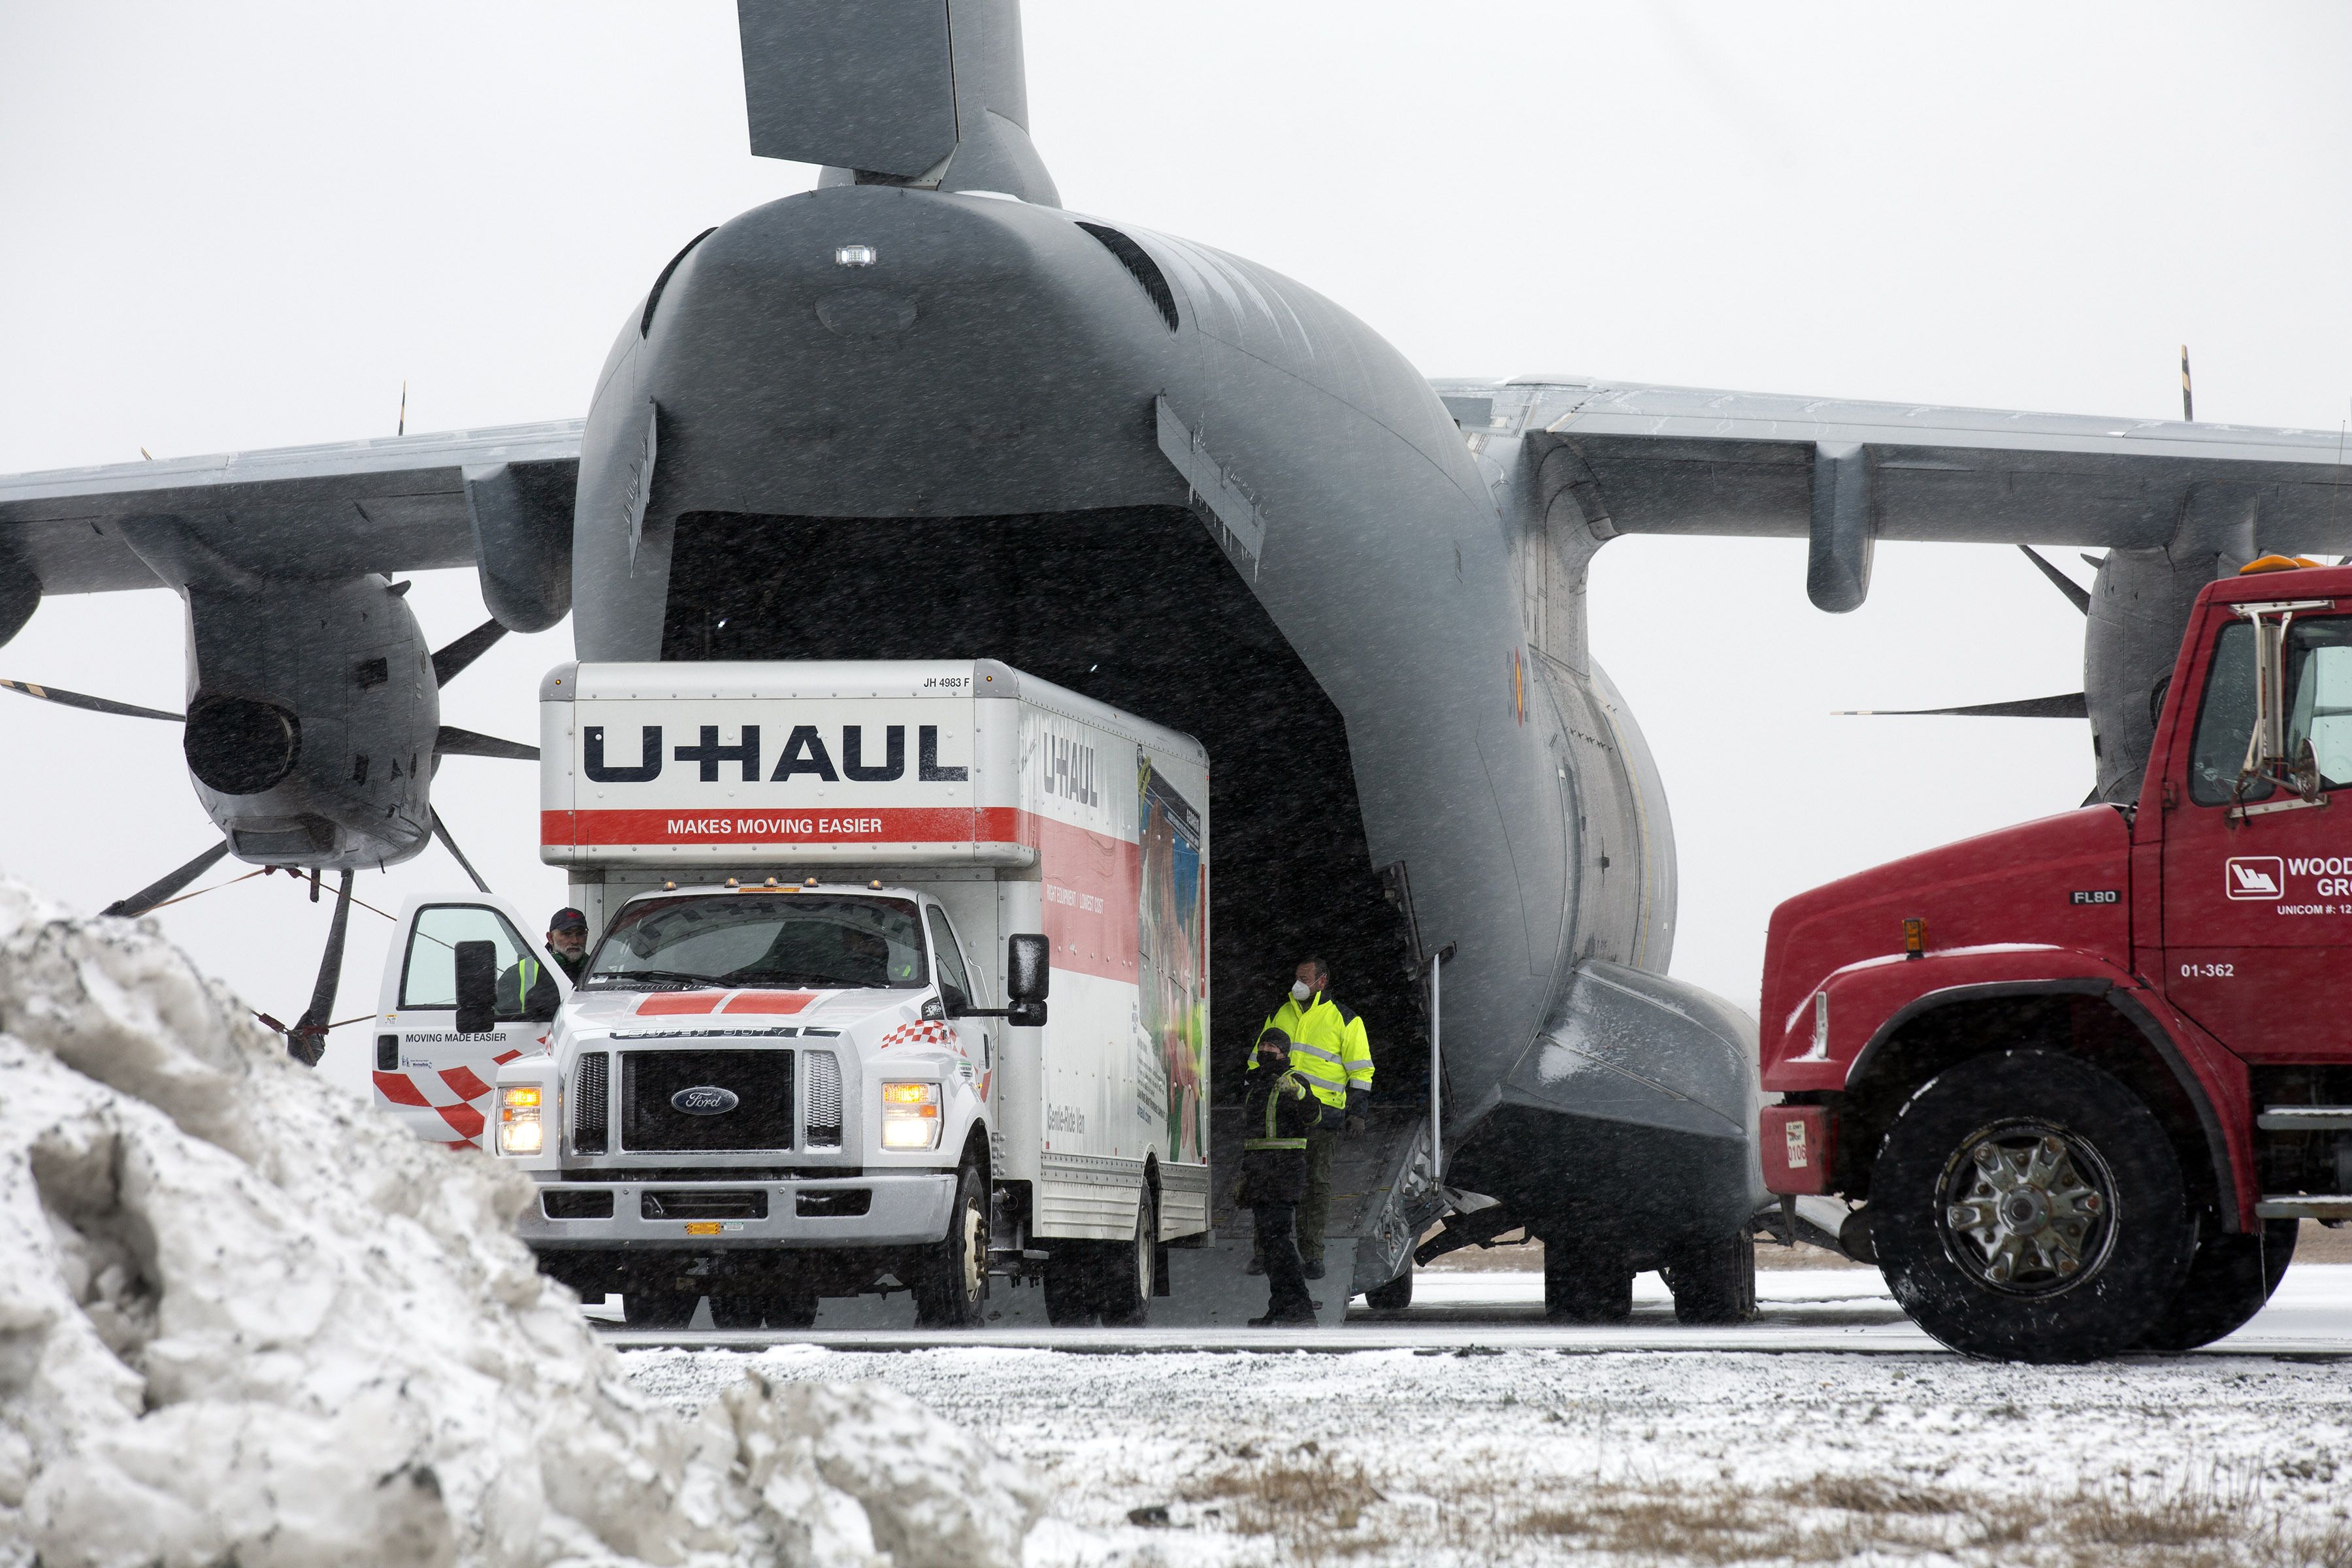 Un camión de alquiler a bordo del avión a su llegada en el aeropuerto de San Juan de Terranova, a 20 de febrero de 2022, en Terranova, Canadá - Europa Press.